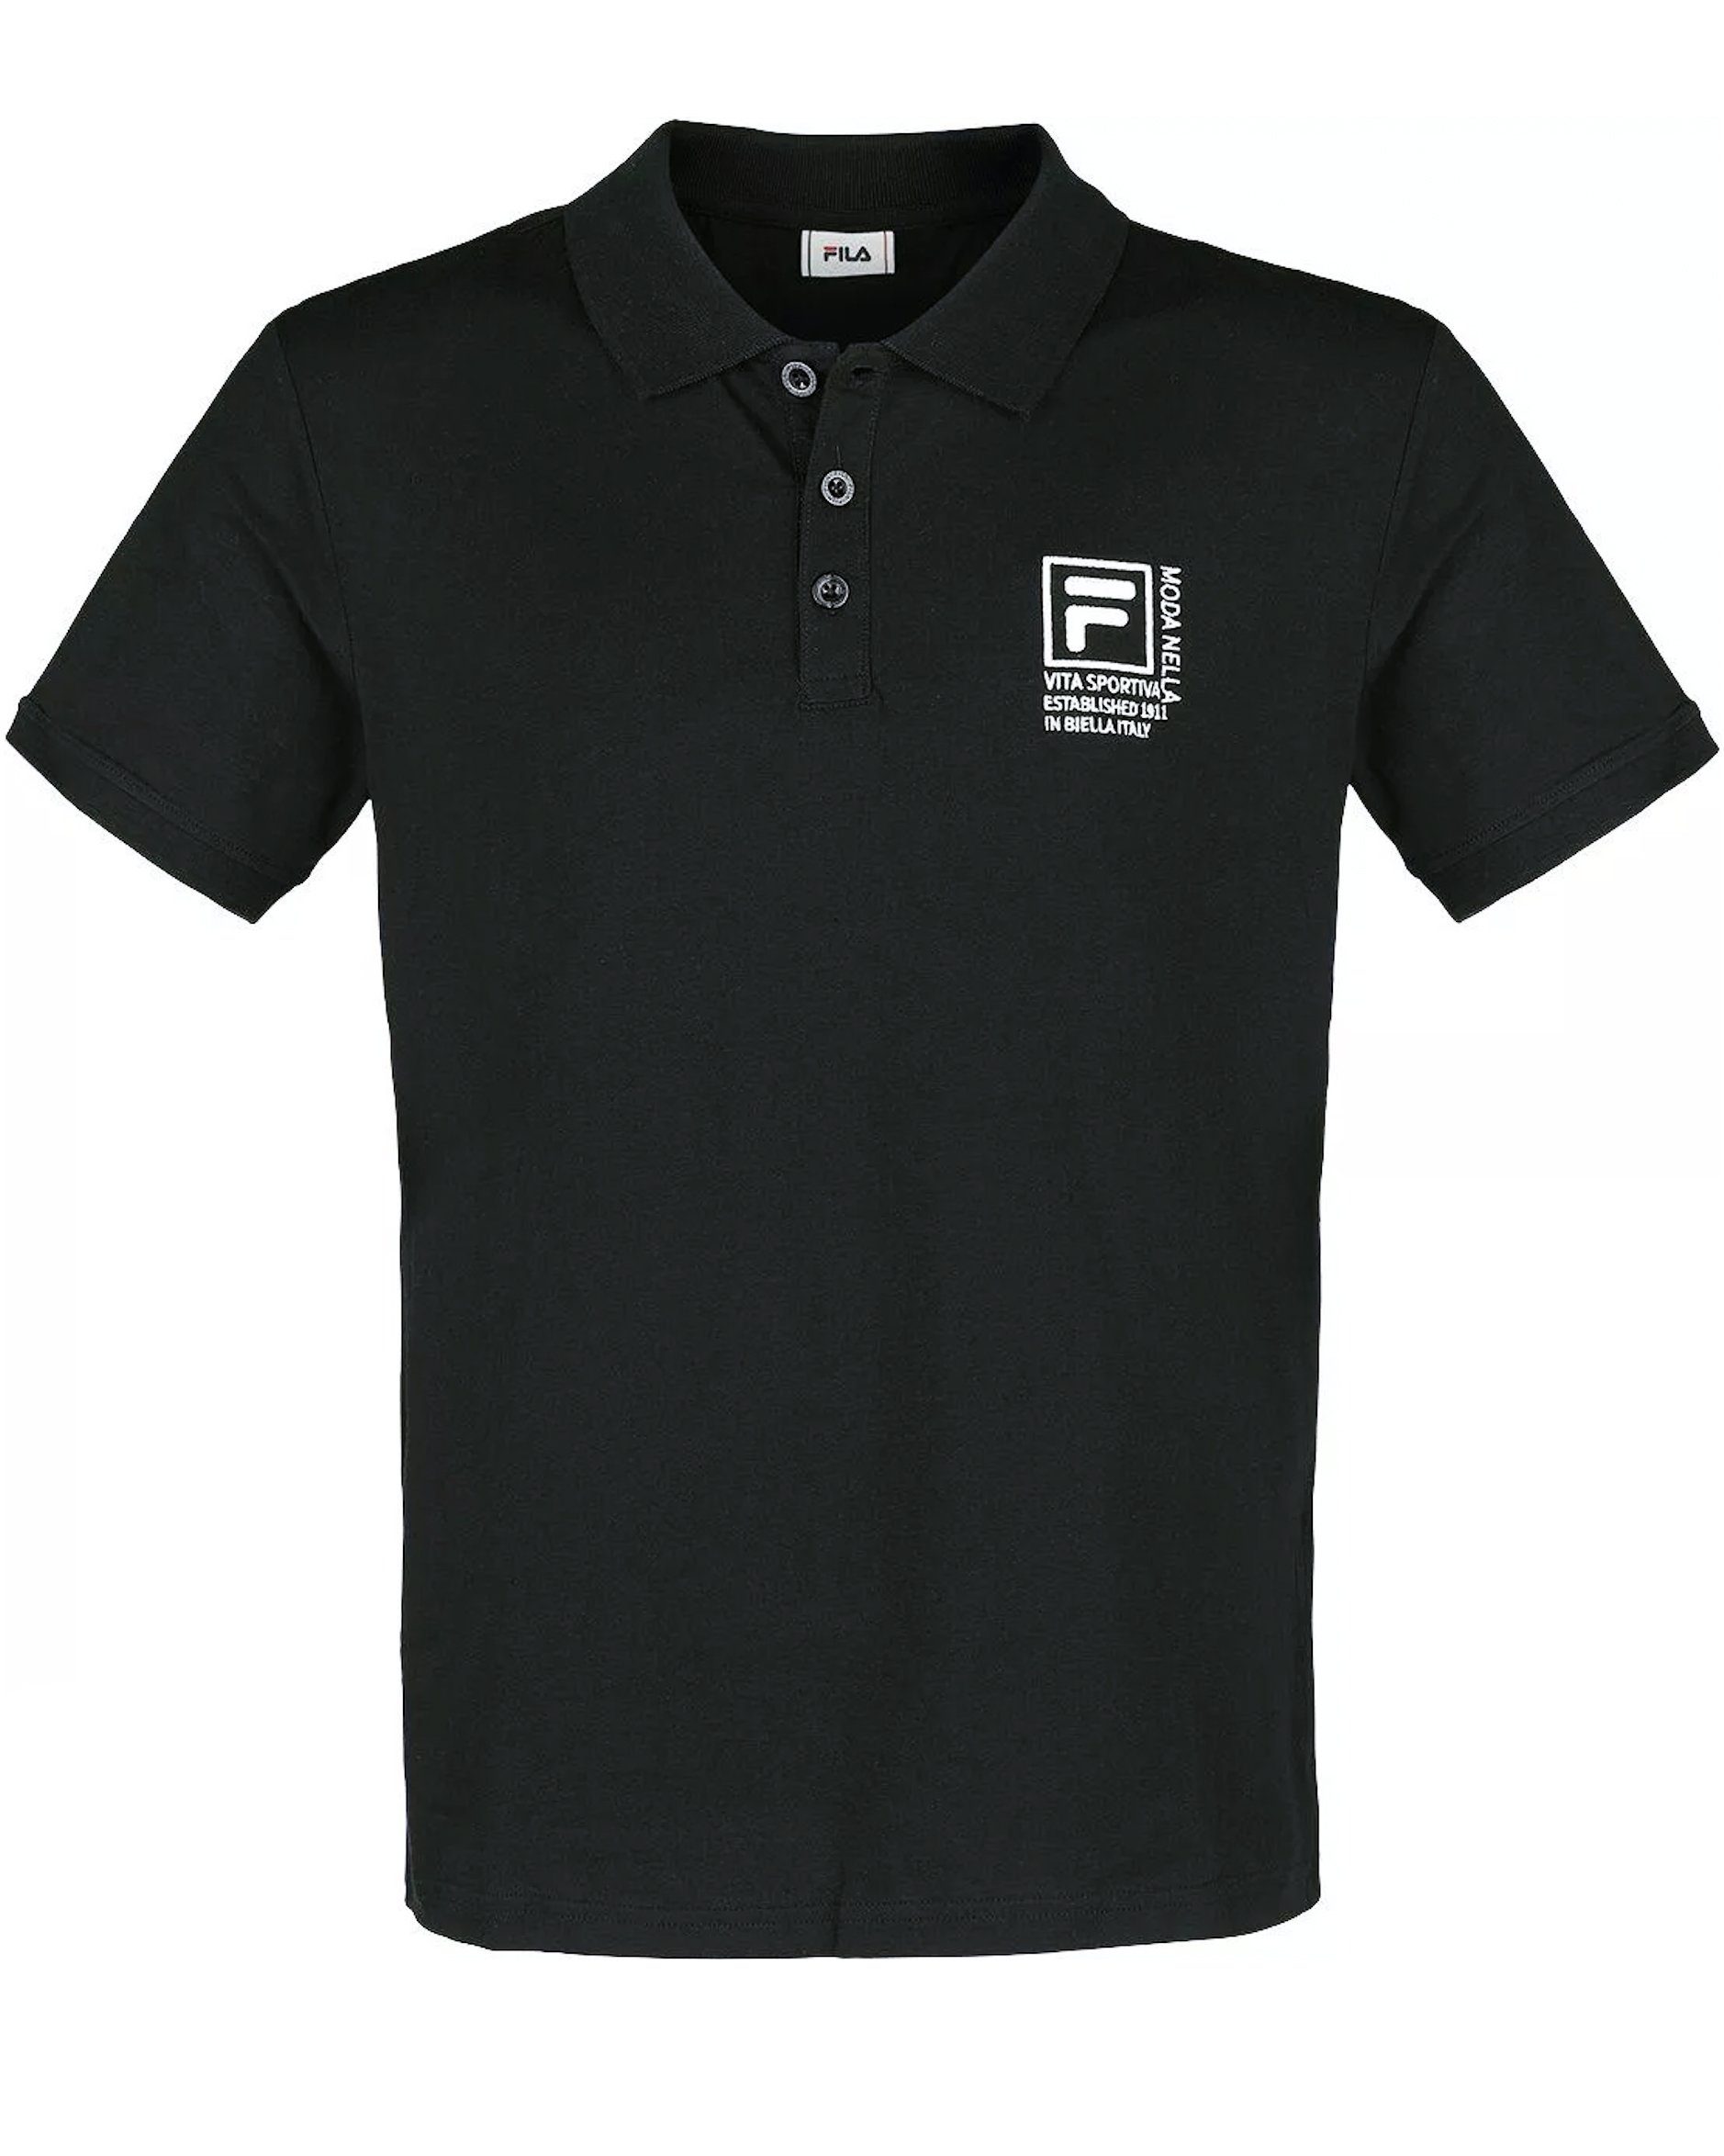 - RIGG Schwarz Logo Shirt Kurzarm Poloshirt Fila